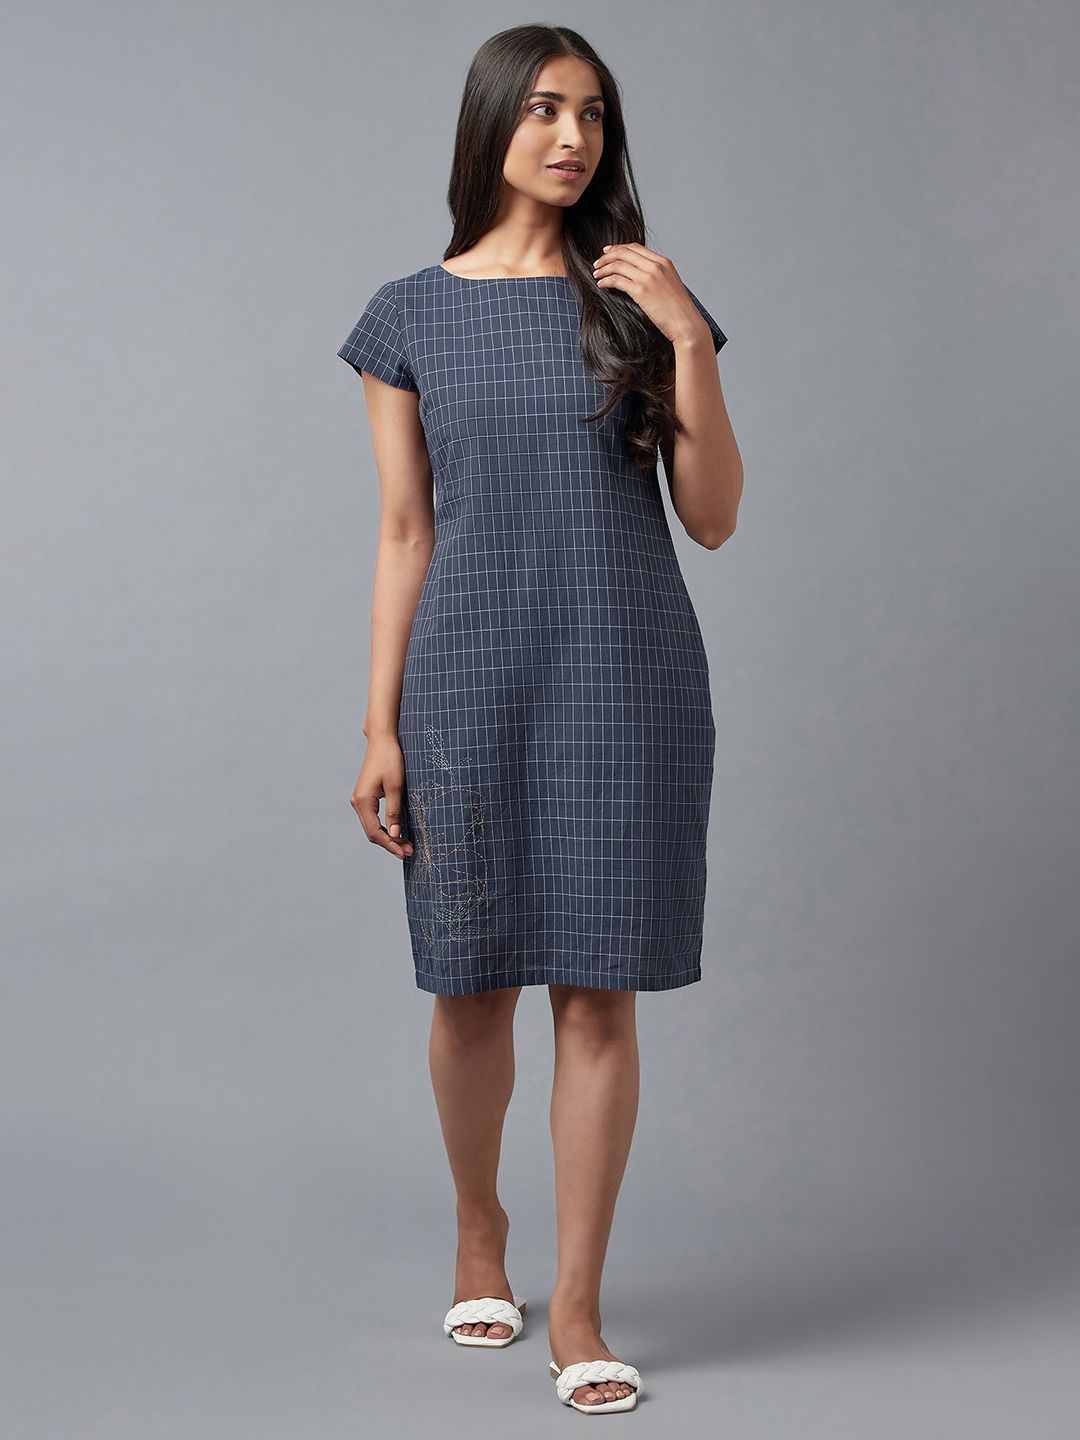 W Blue Checked Pure Cotton Sheath Dress Price in India